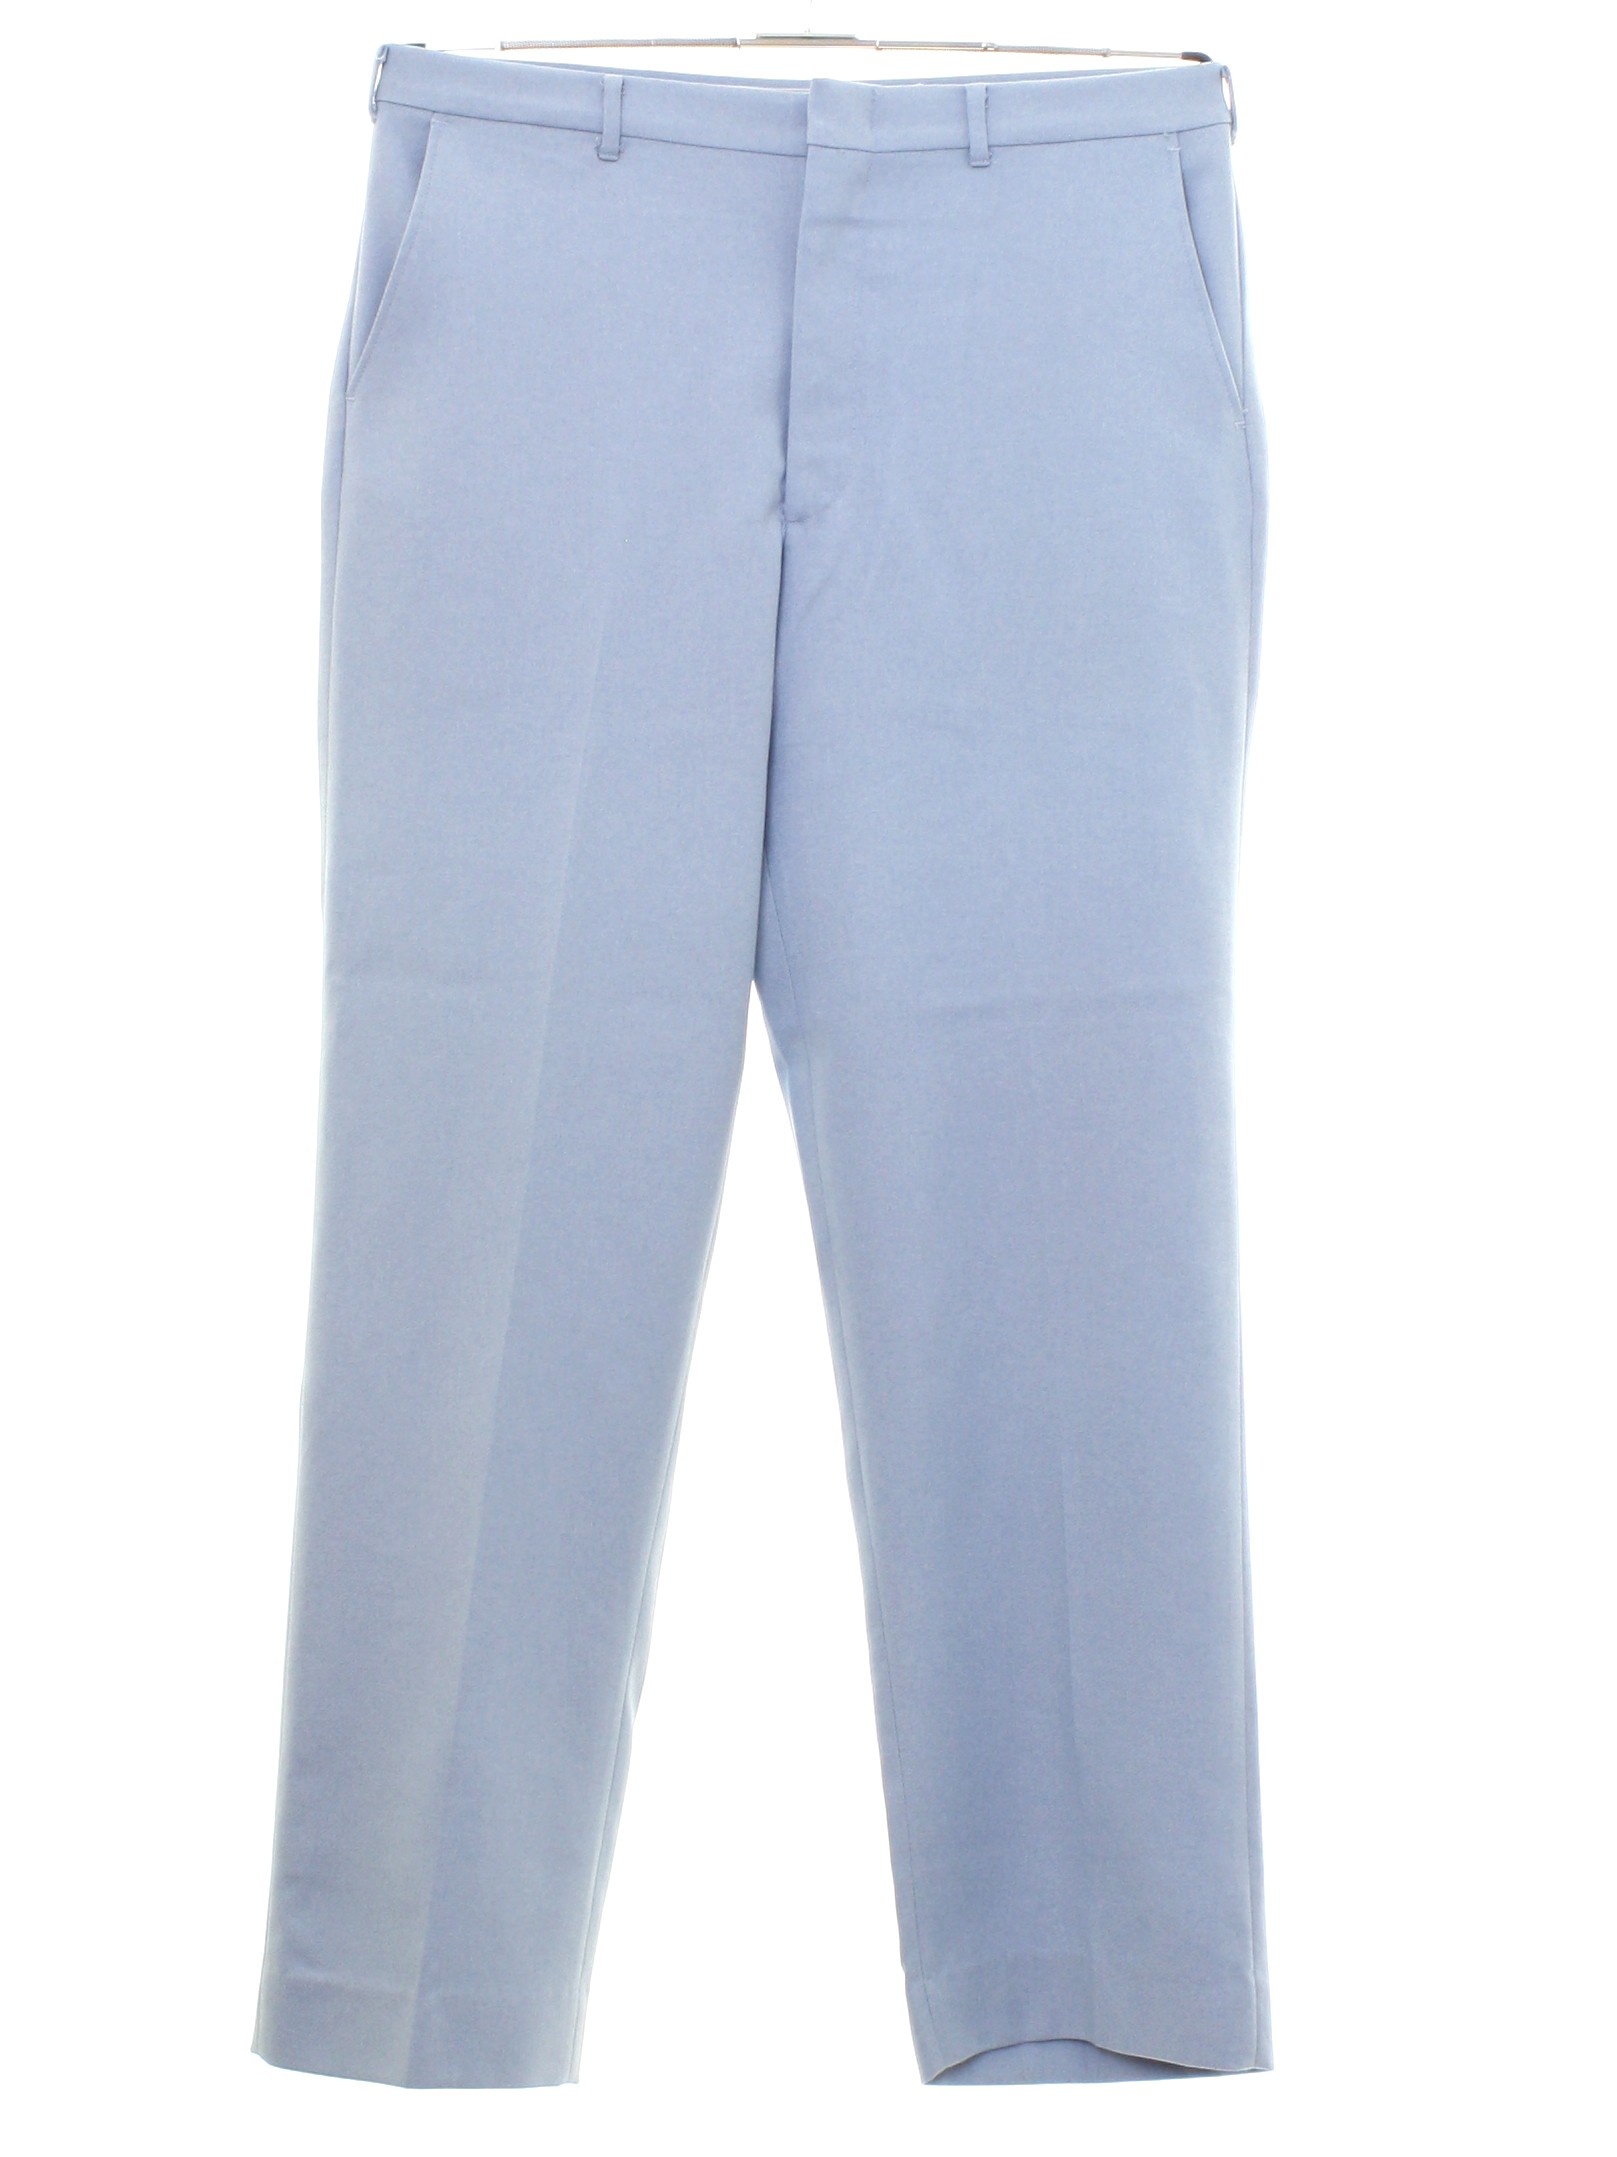 Vintage 70's Pants: 70s -No Label- Mens light blue solid colored ...